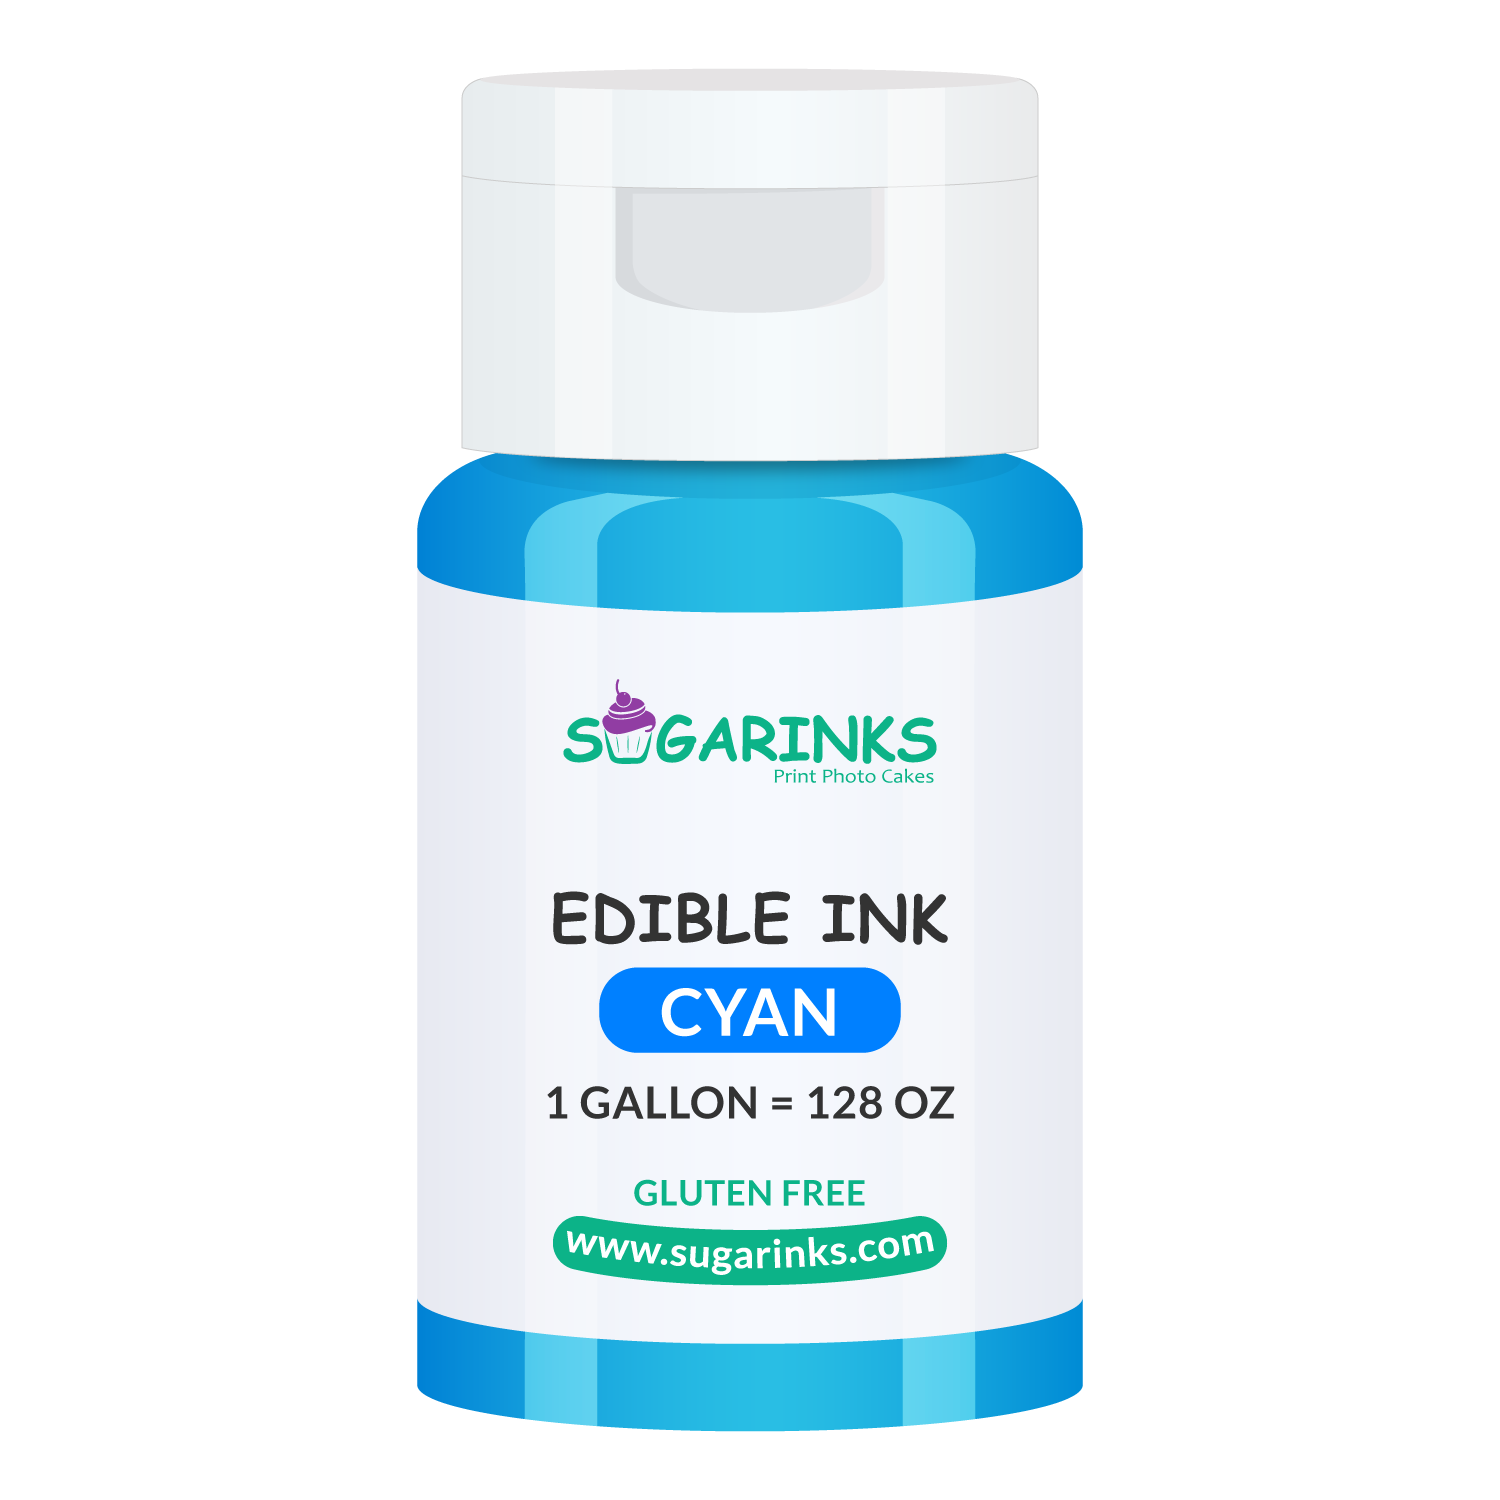 Sugarinks Edible Ink Refill for Canon Edible Printers (1 Gallon/128Oz) – Cyan